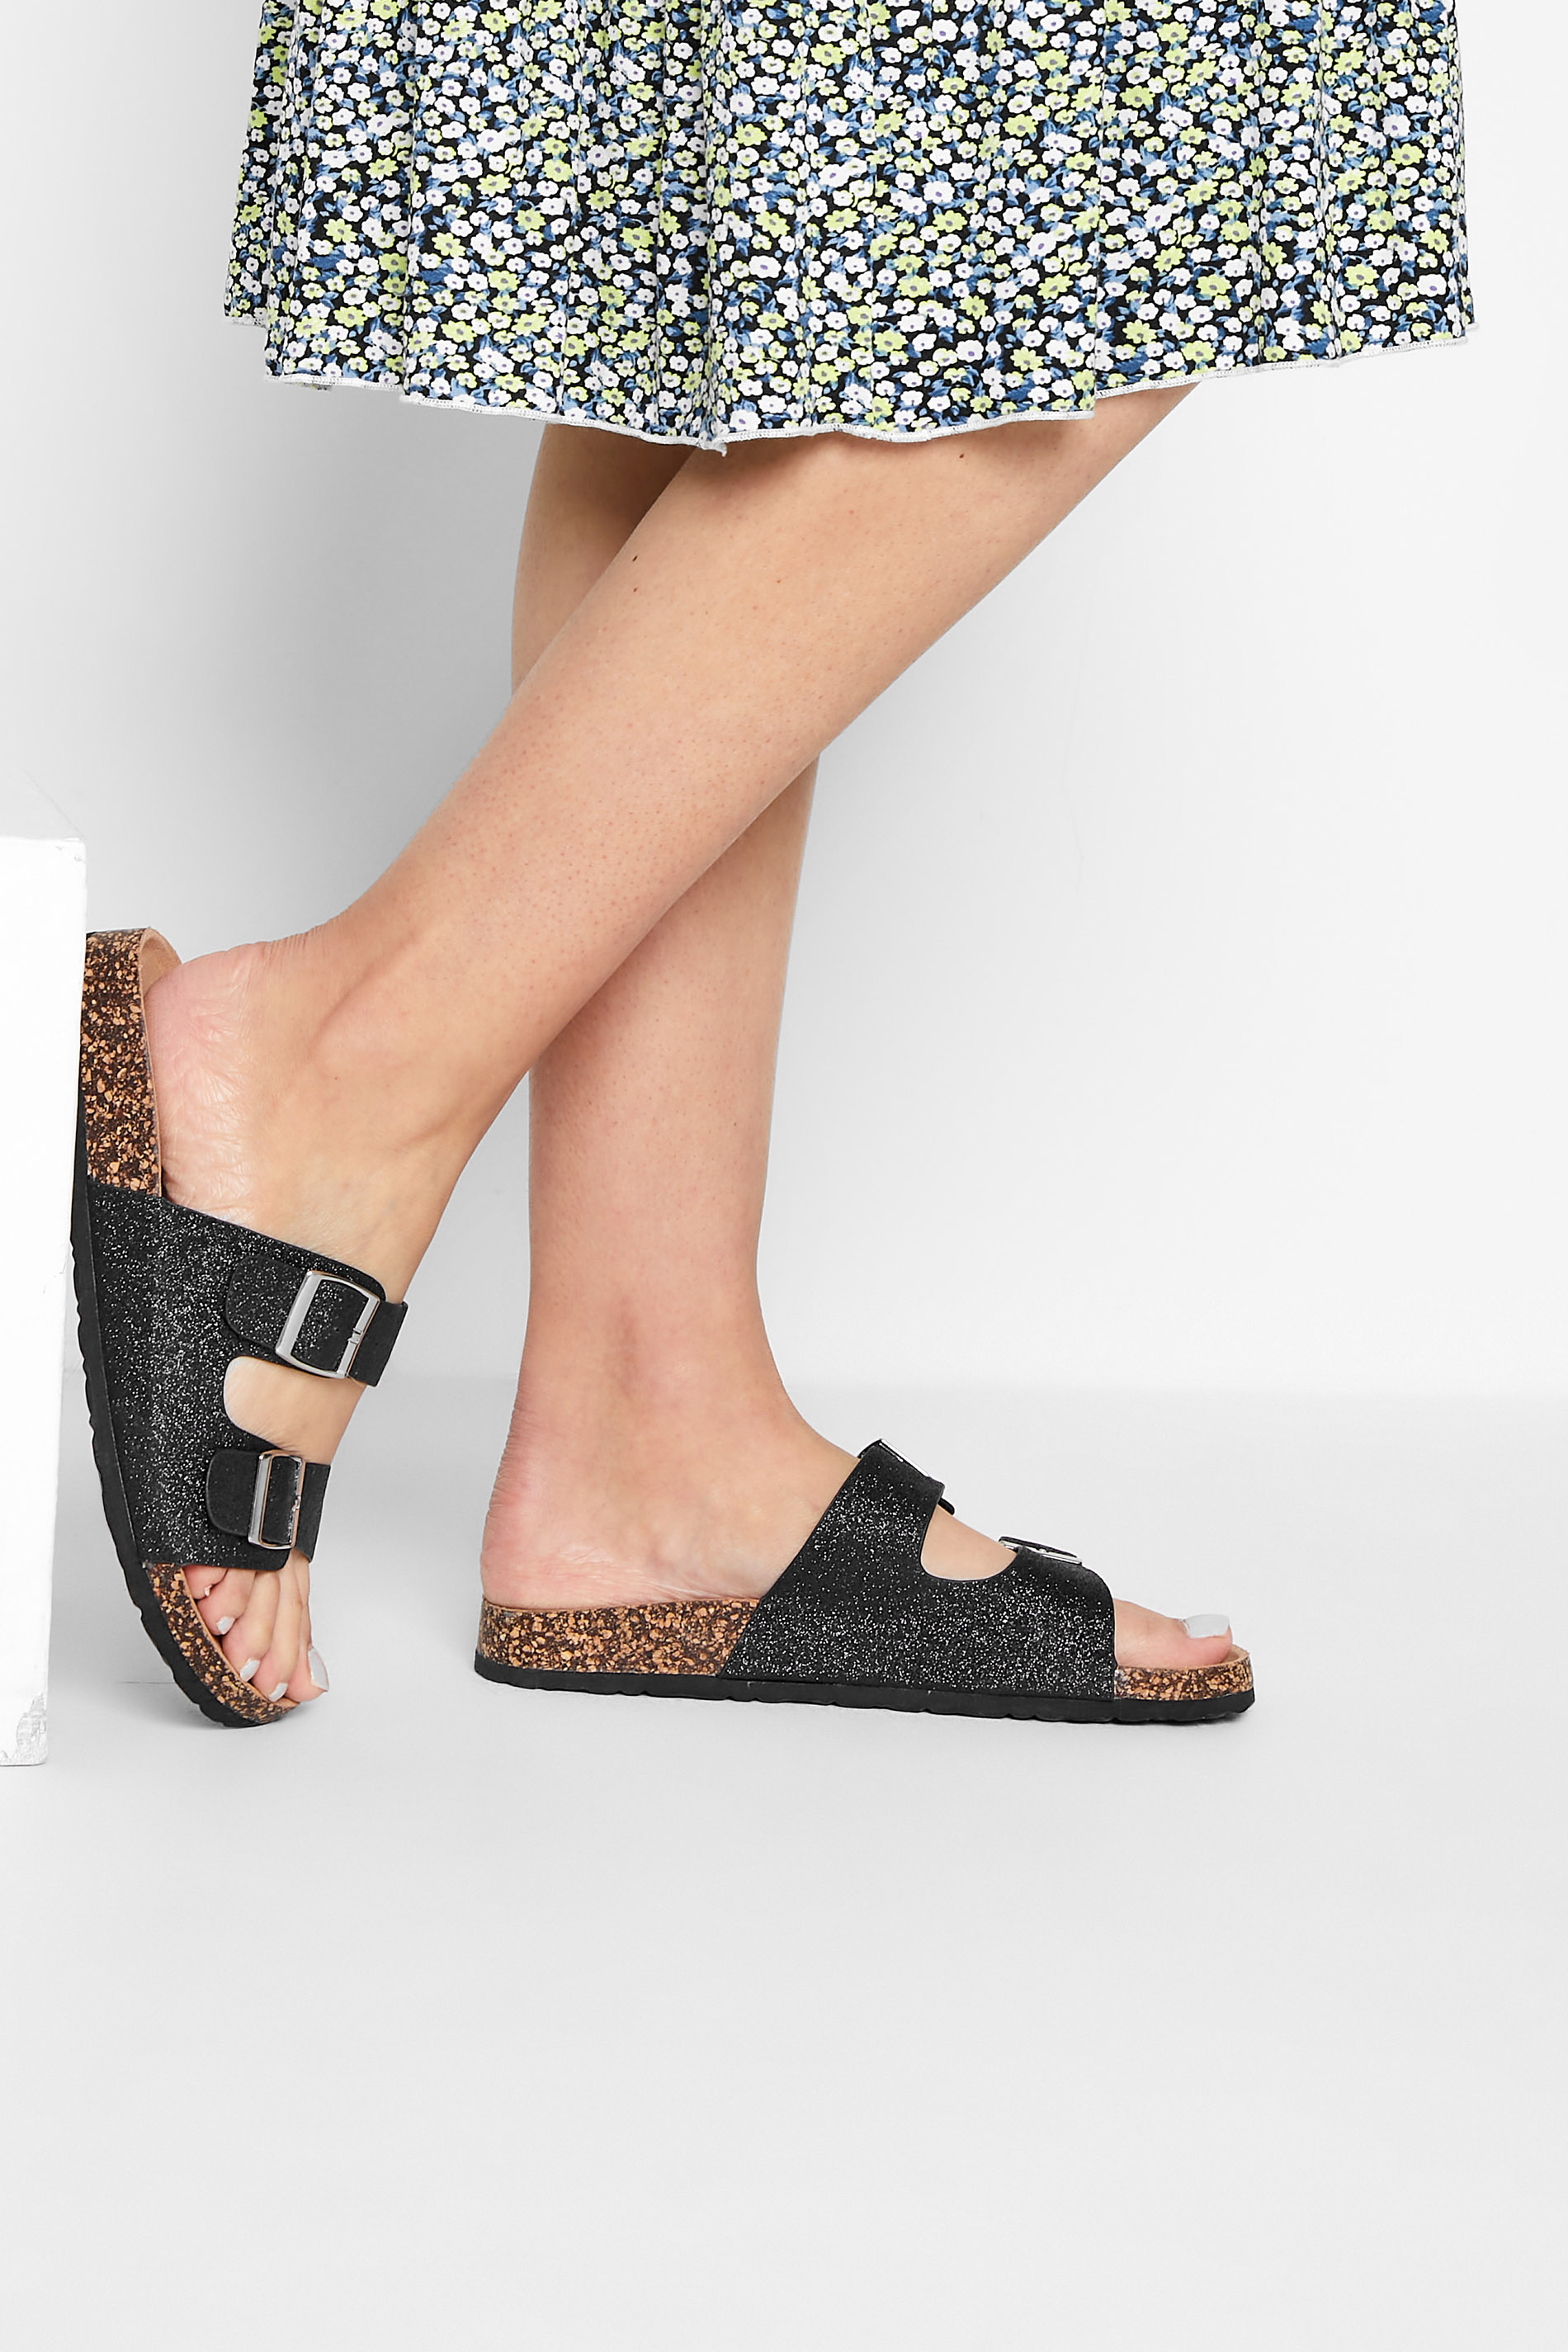 LTS Black Glitter Buckle Strap Sandals In Standard D Fit | Long Tall Sally  1